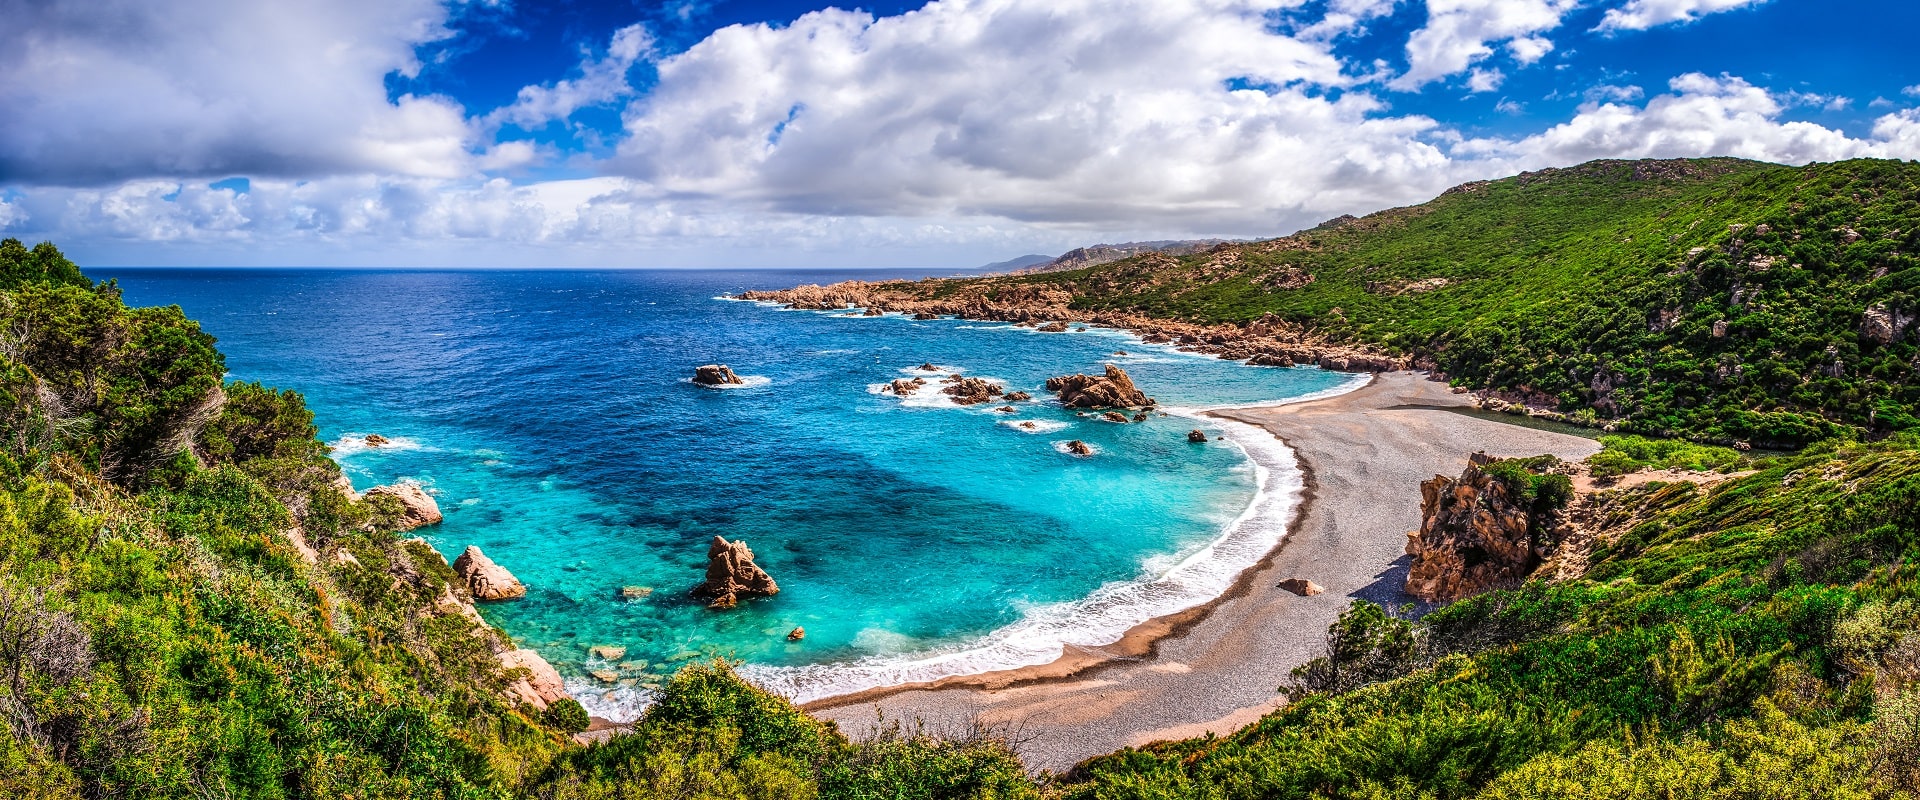 Sardinia: Alghero, Costa Smeralda and Corsica